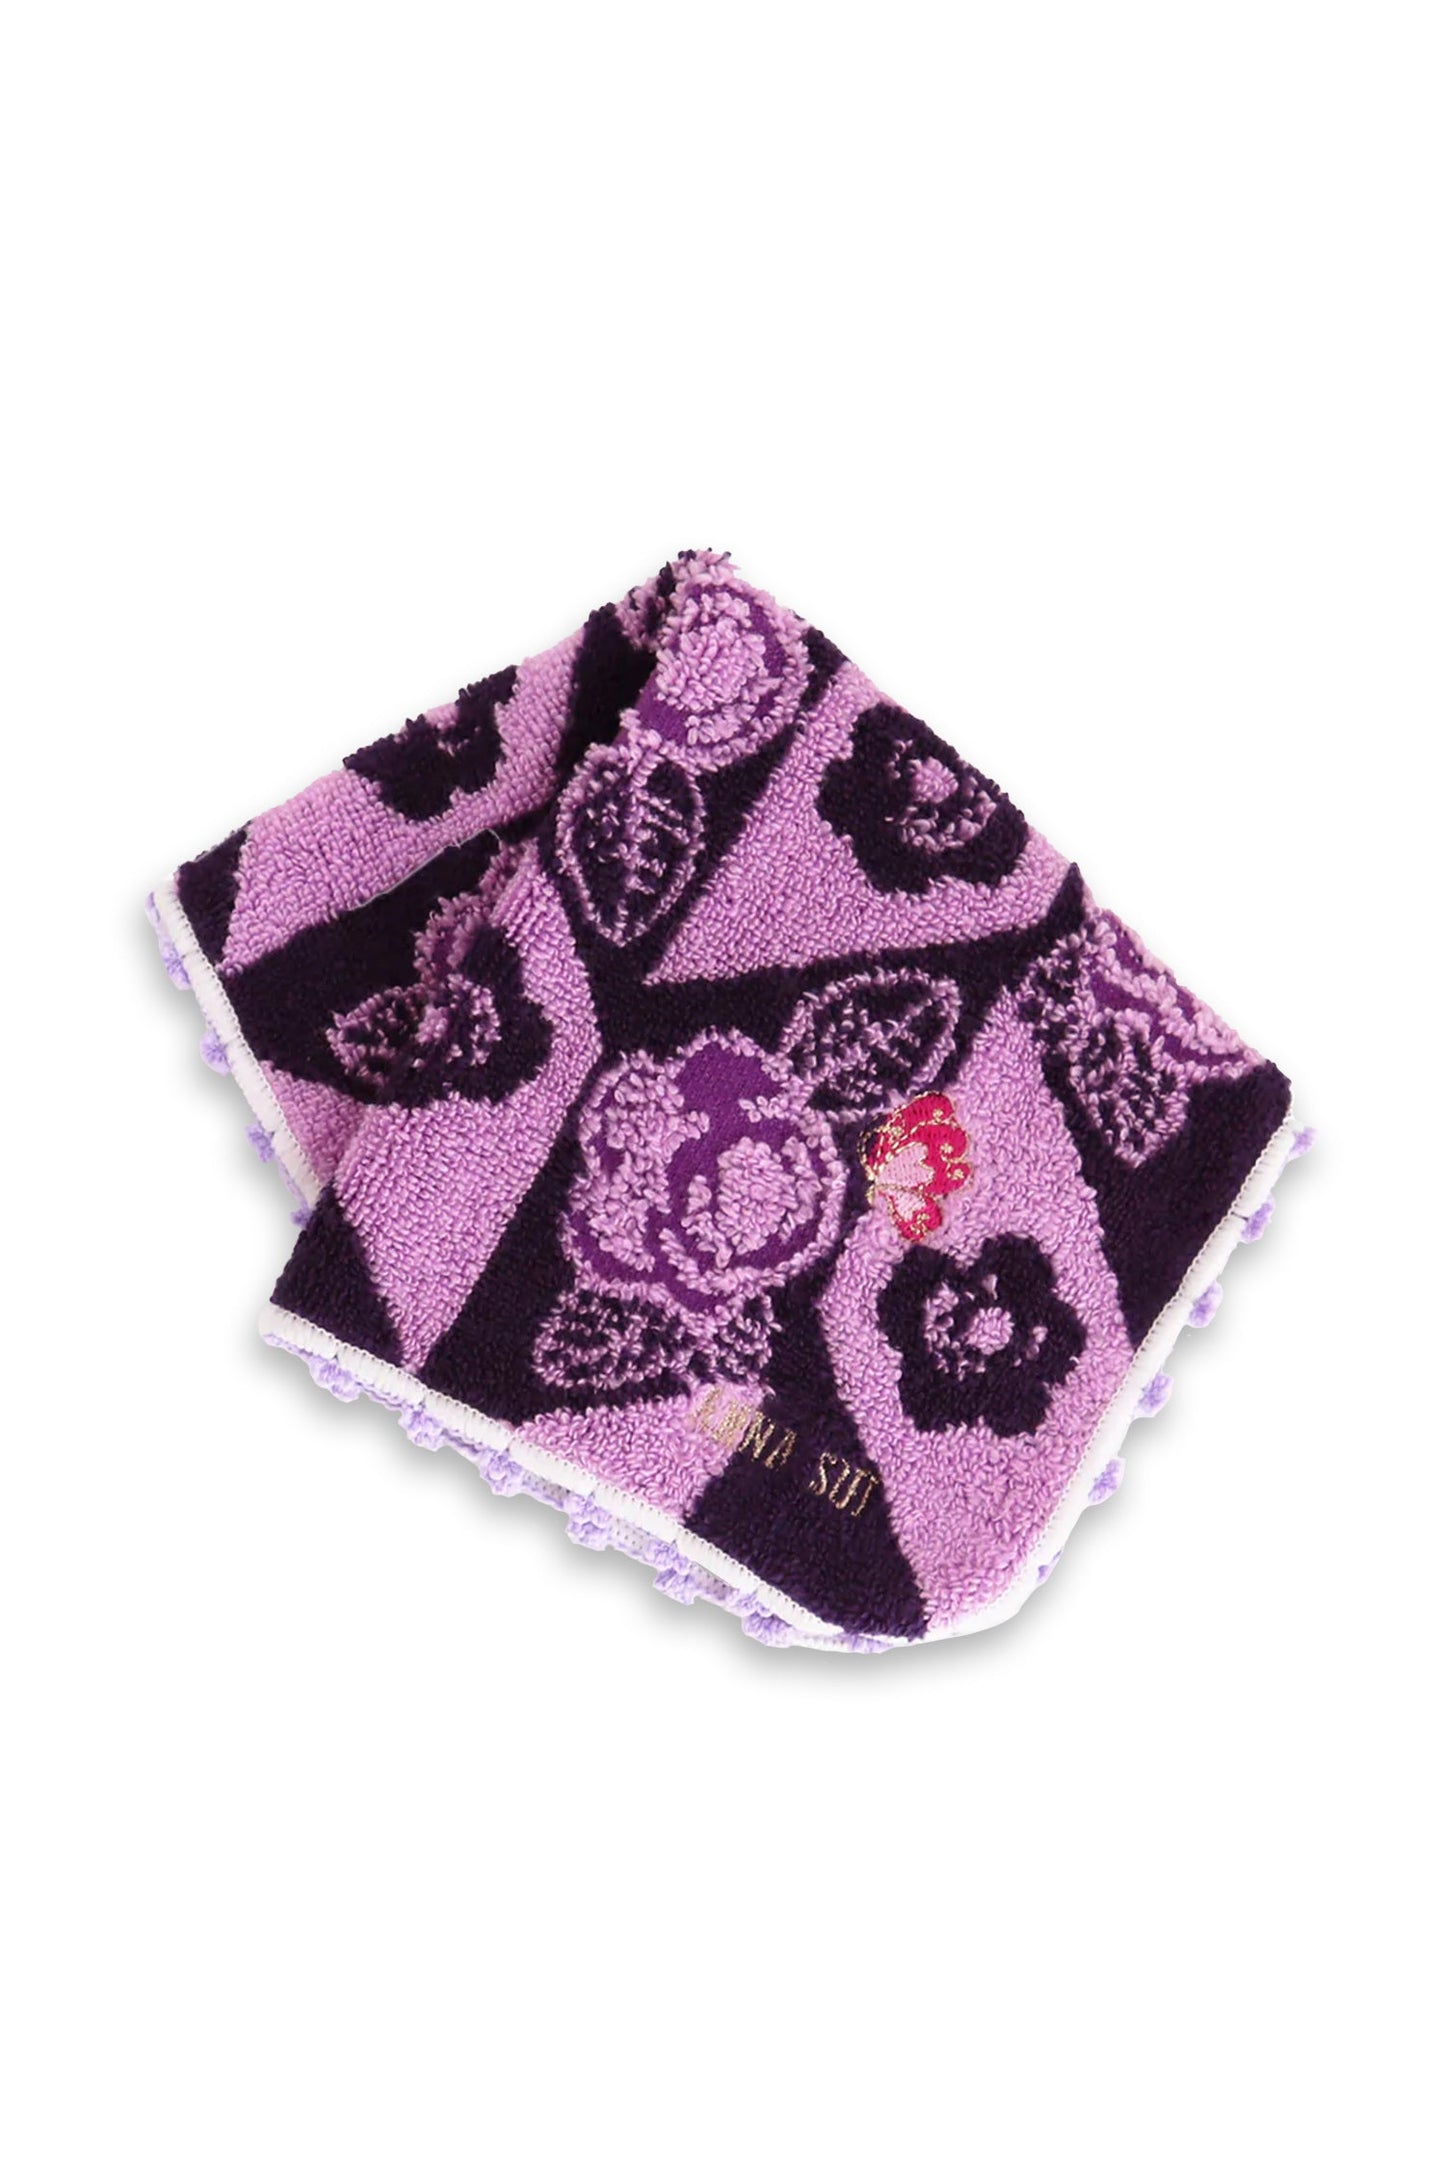 Roses Washcloth, alternate purple/black, golden Anna Sui label on edge, orange butterfly above